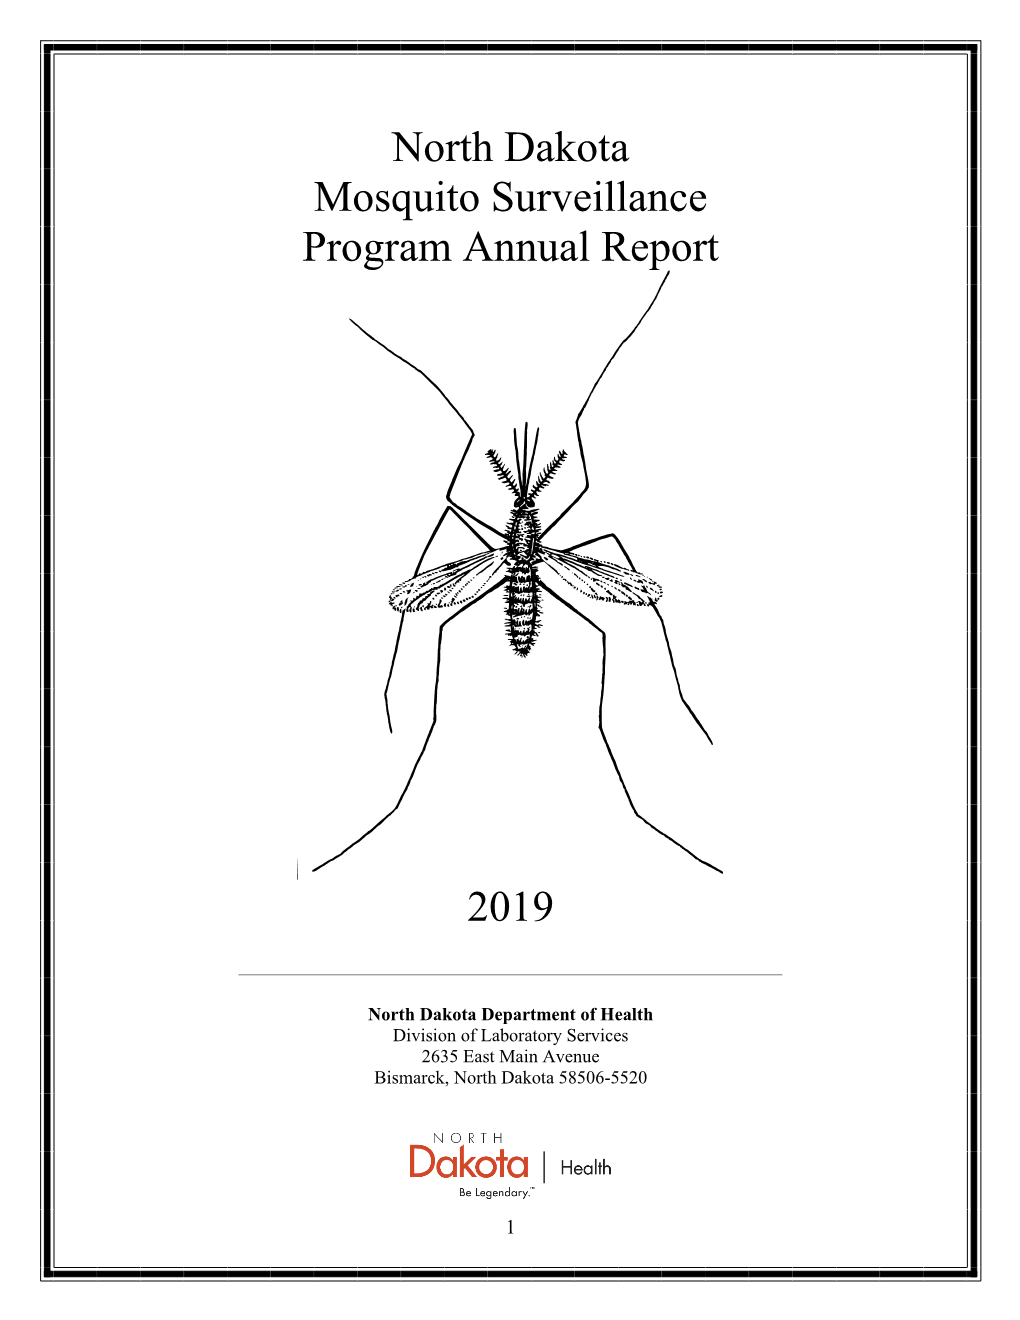 North Dakota Mosquito Surveillance Program Annual Report 2019